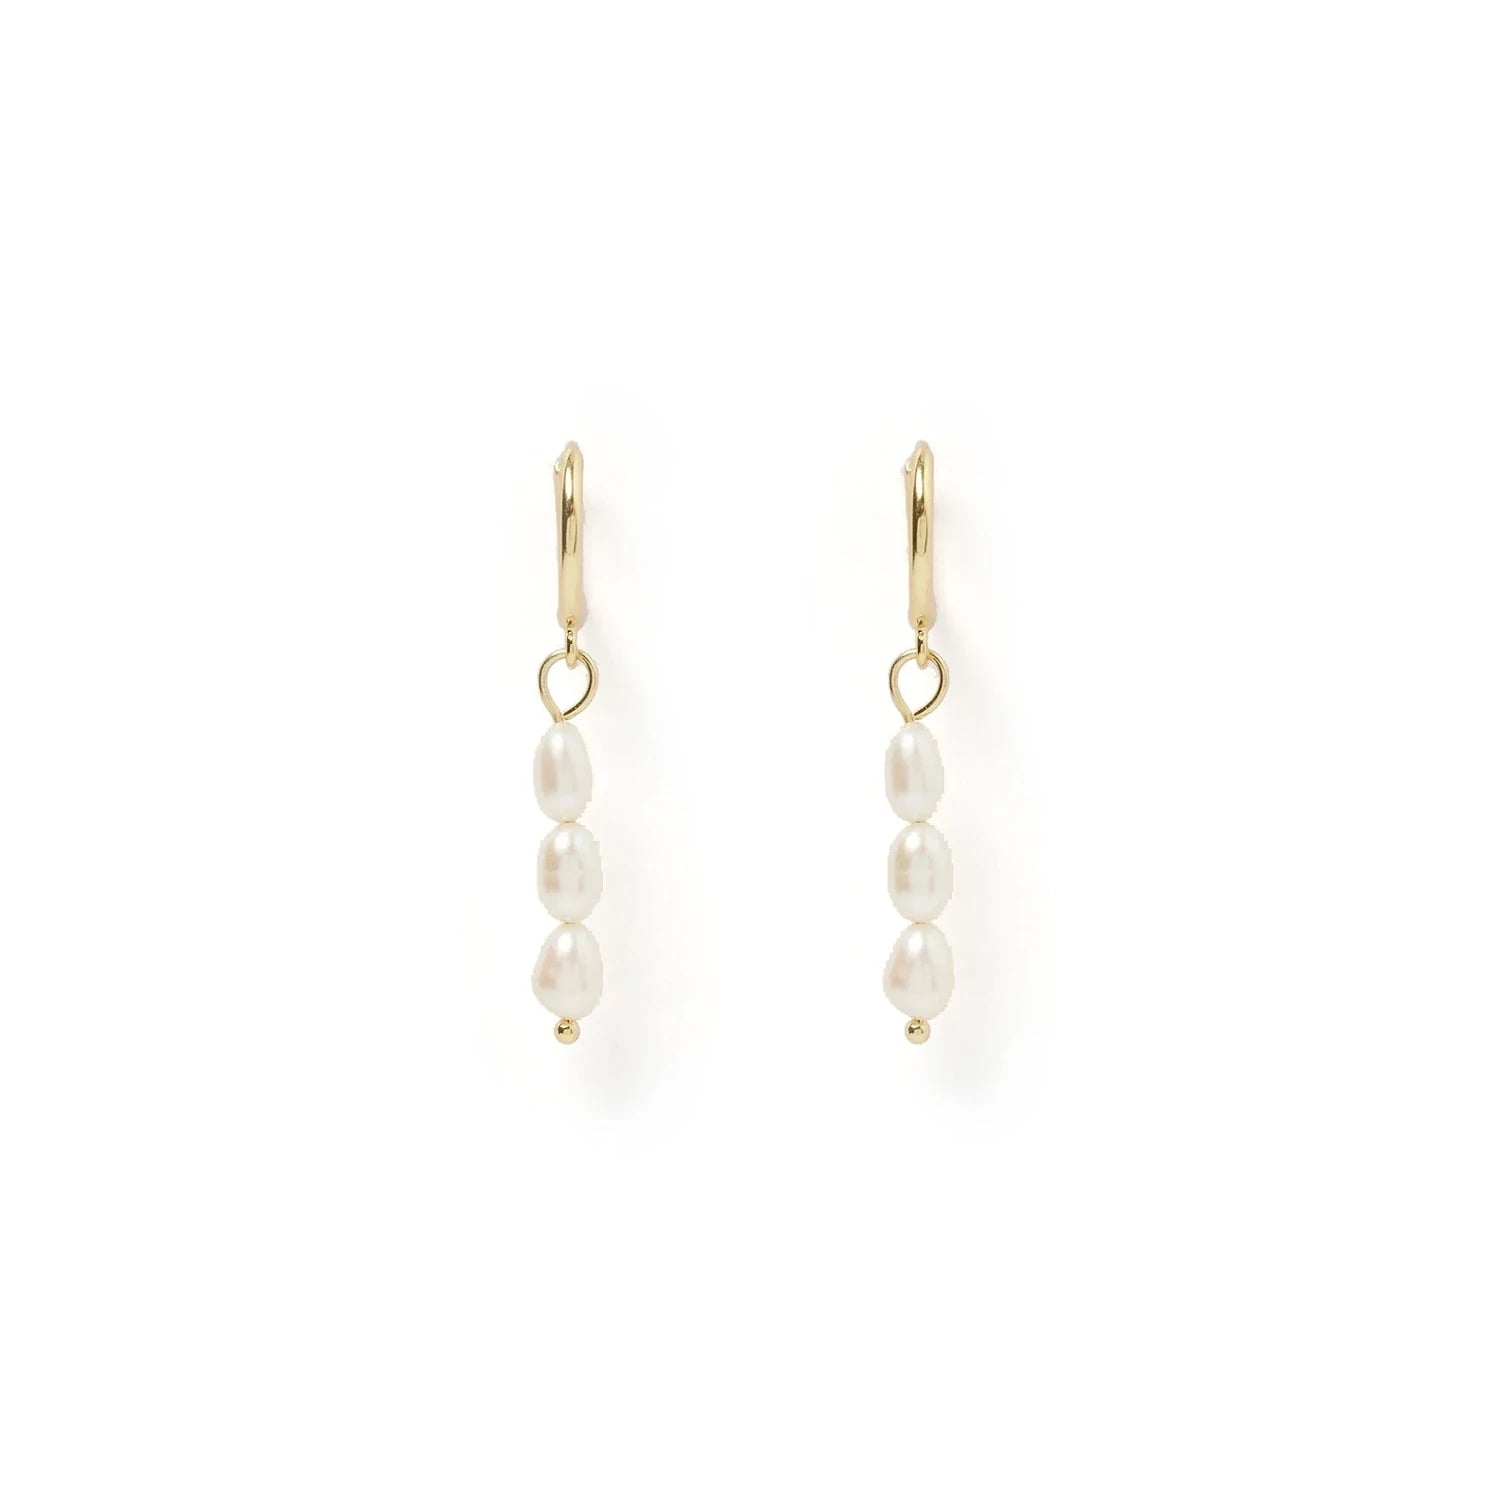 Indiana Gold/Pearl Earrings